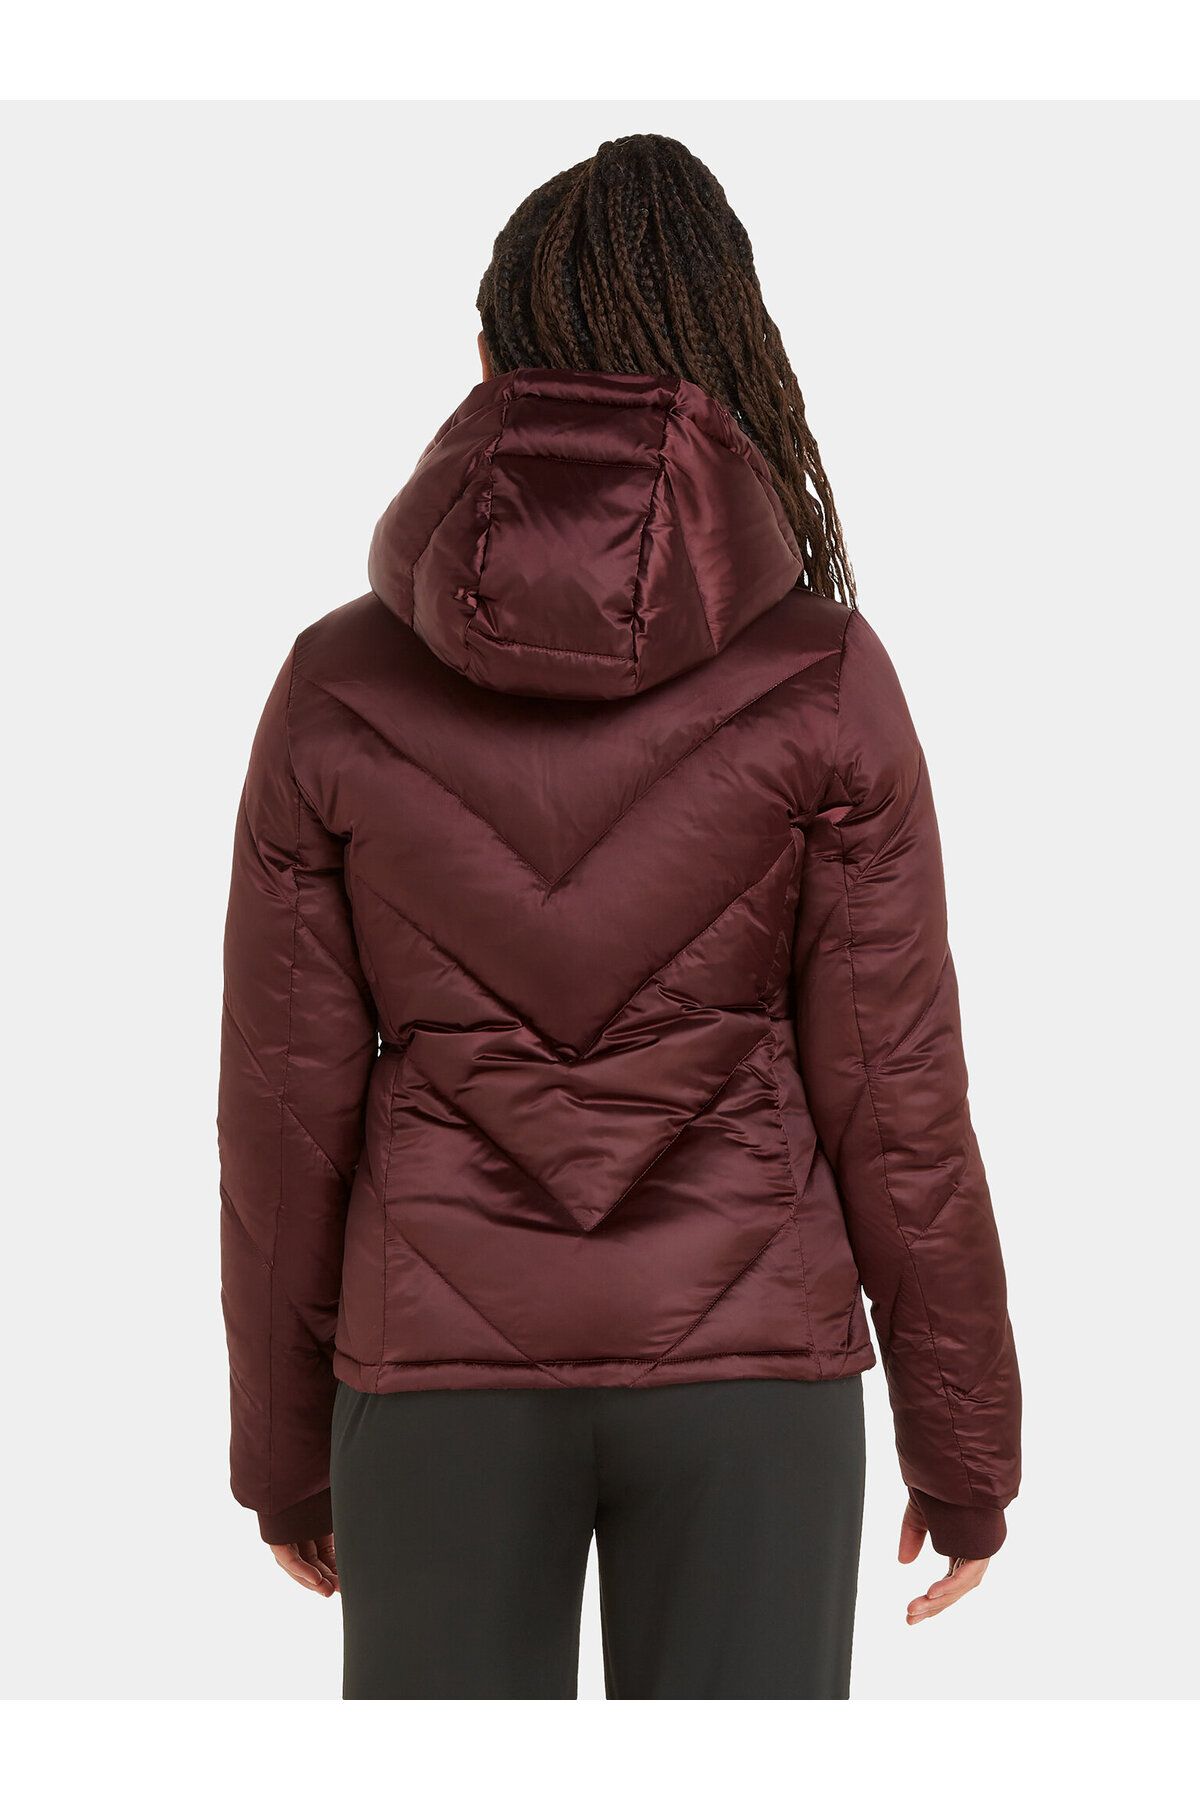 Calvin Klein Relaxed - Trendyol Burgundy - Jacket - Winter fit